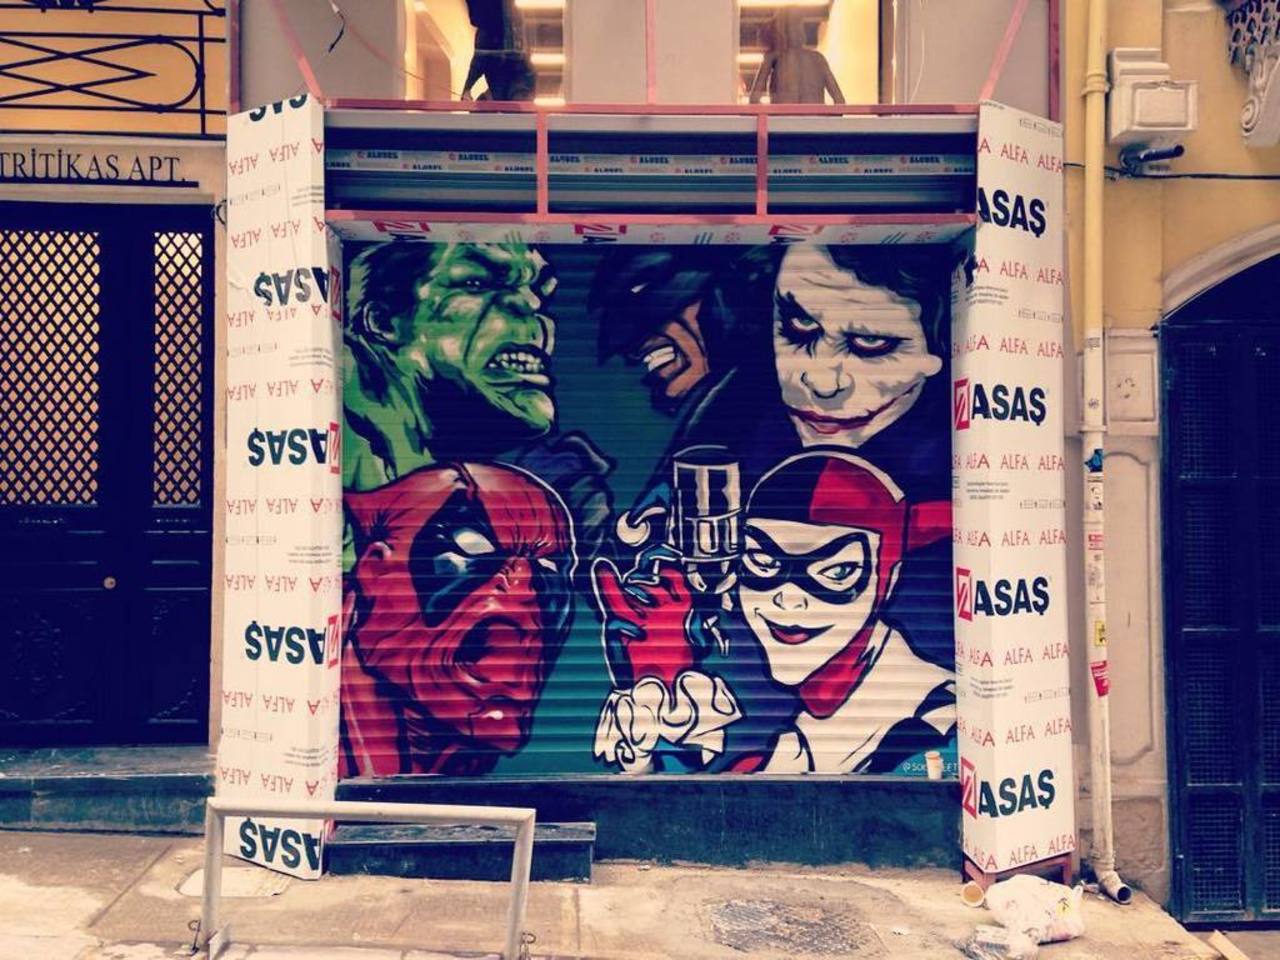 #streetsofistanbul #streetart #urbanart #graffiti #wallart #batman #joker #hulk #comics #art #igersistanbul #galata… http://t.co/DkAlORg3I9